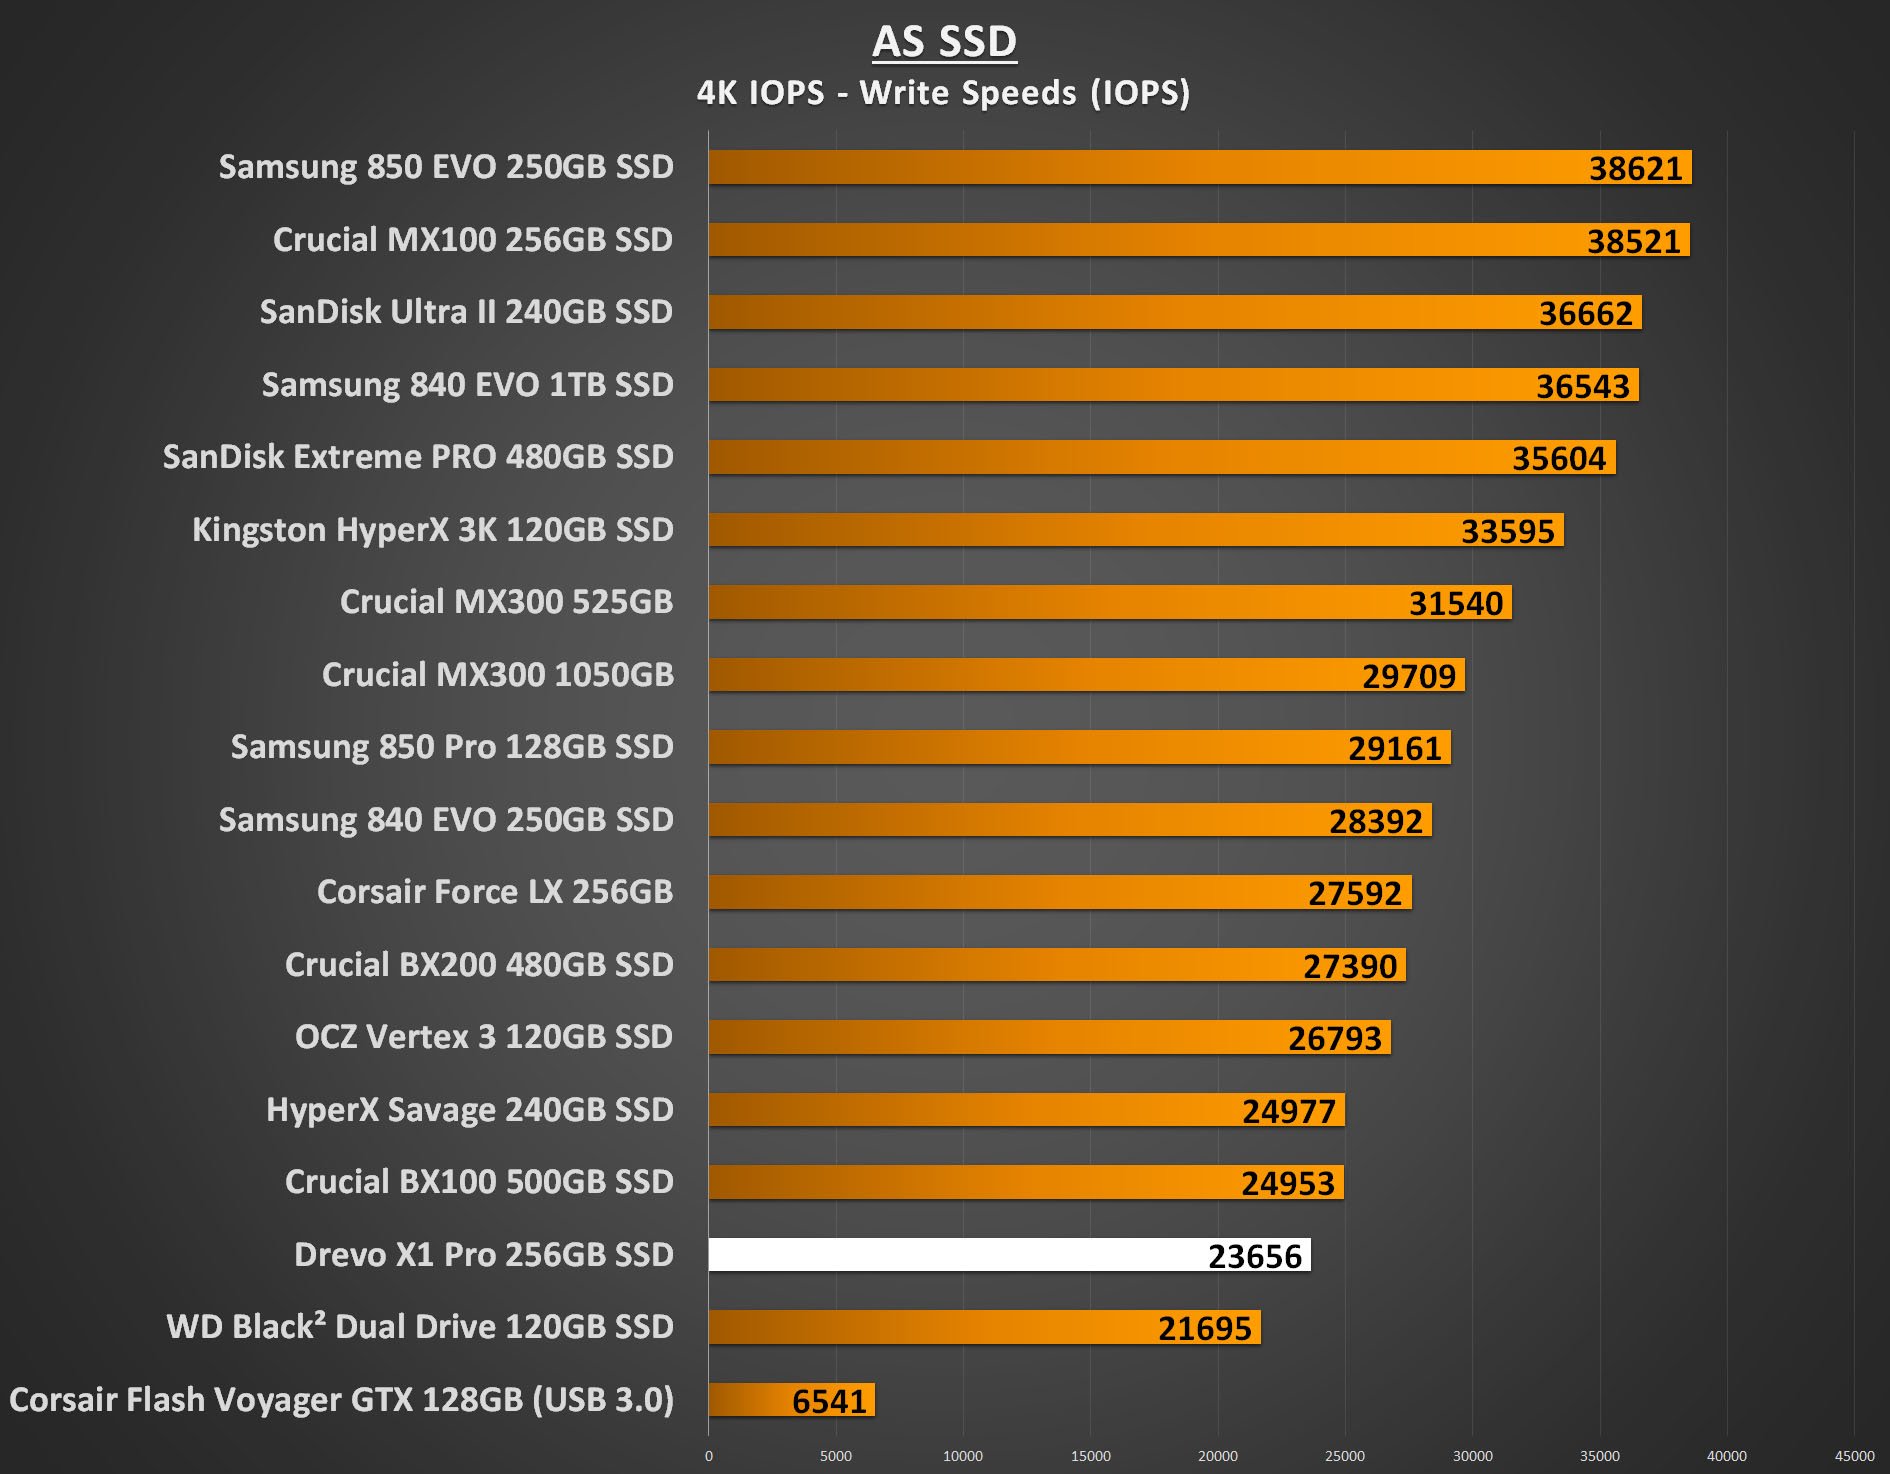 Drevo X1 Pro 256GB Performance - AS SSD 4K IOPS Write